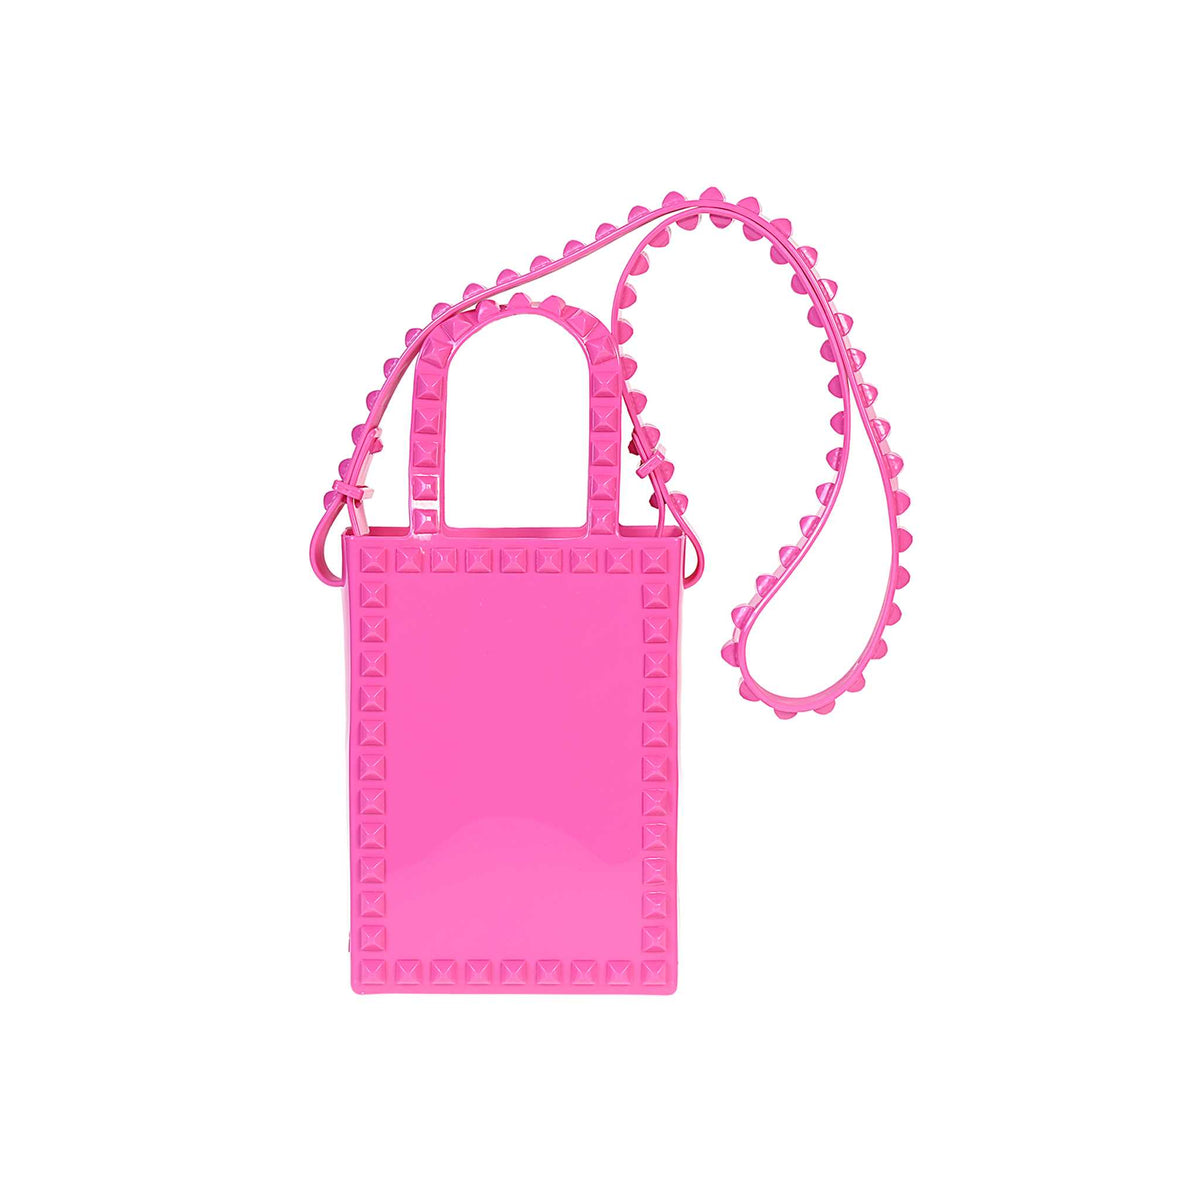 Carmen Sol Shoulder bag are Effortless style, carried crossbody purse